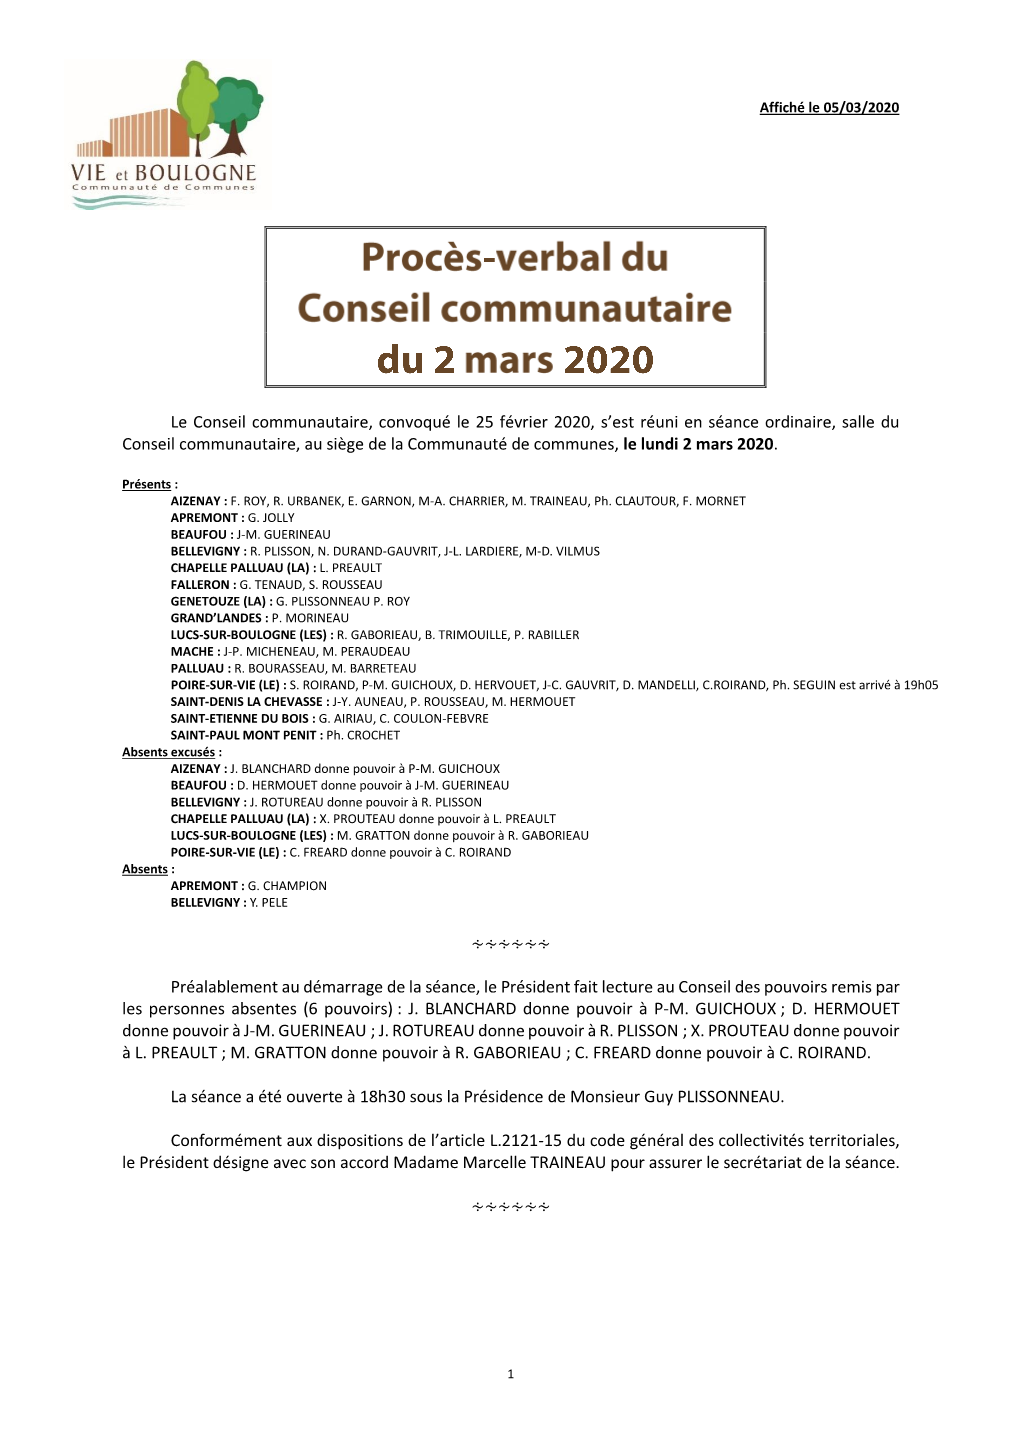 Compte Rendu Conseil Communautaire 2 Mars 2020 1,23 Mo